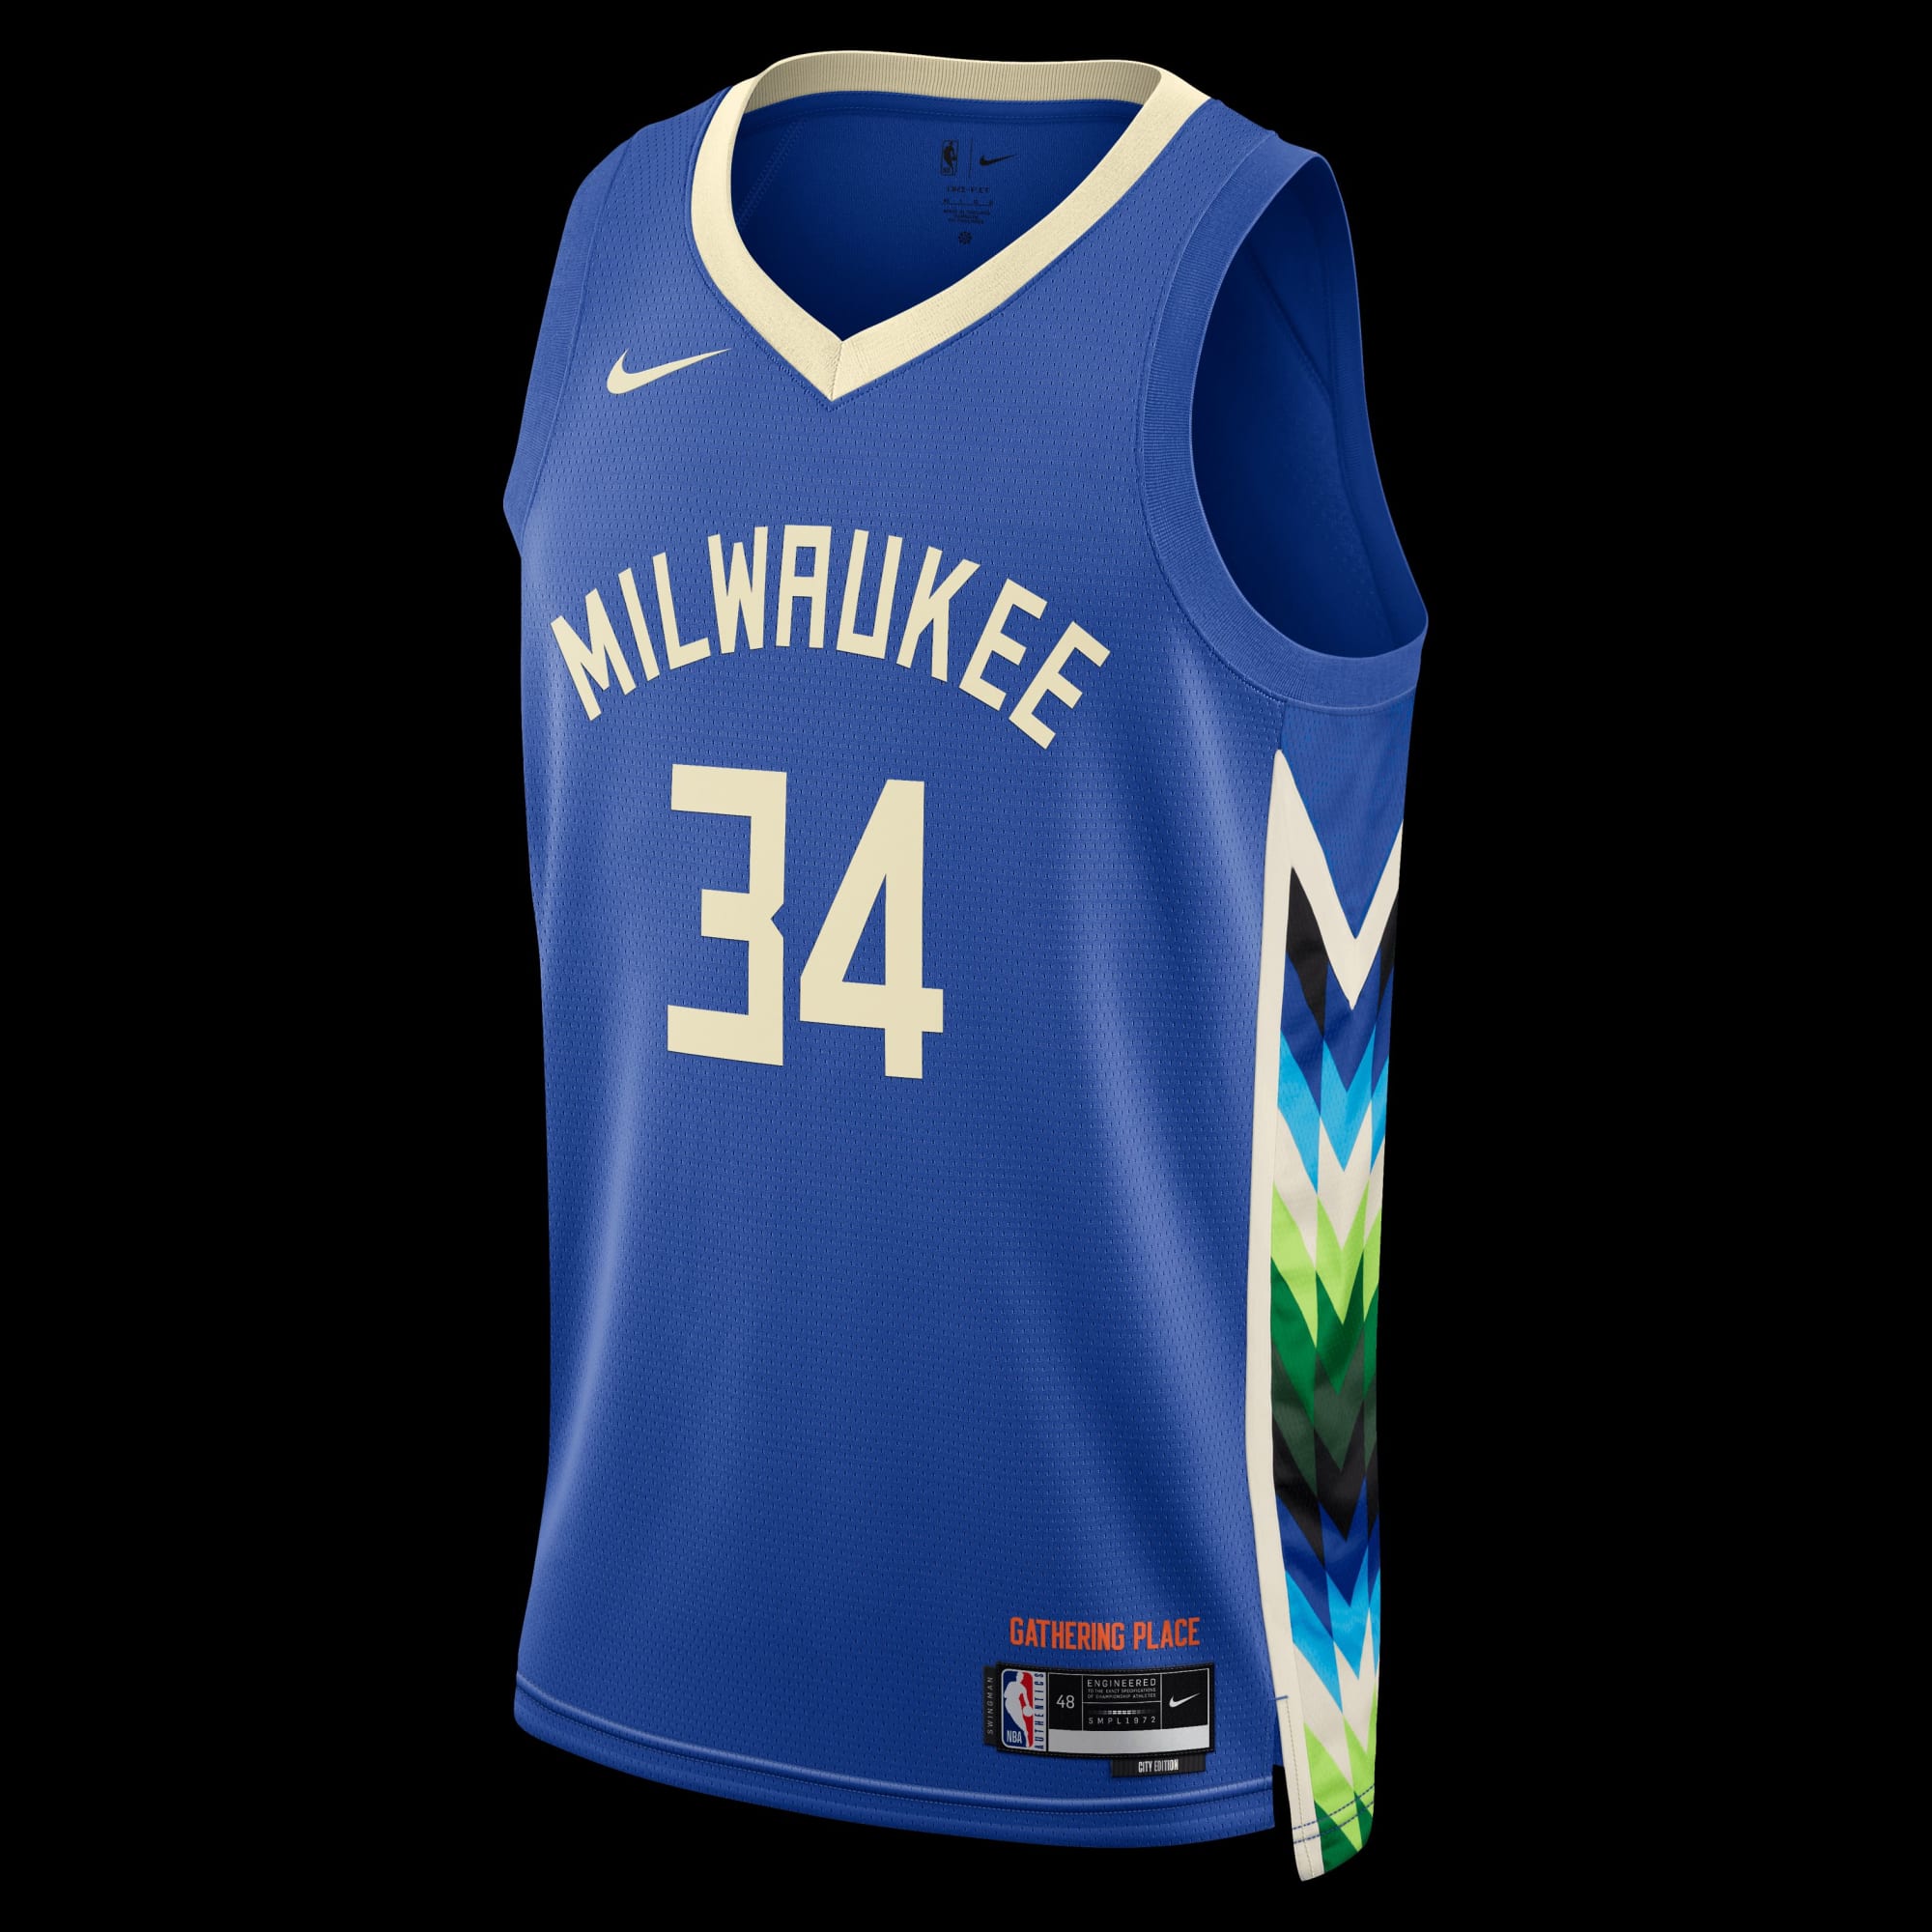 Milwaukee Bucks debut new court to match blue City Edition jerseys